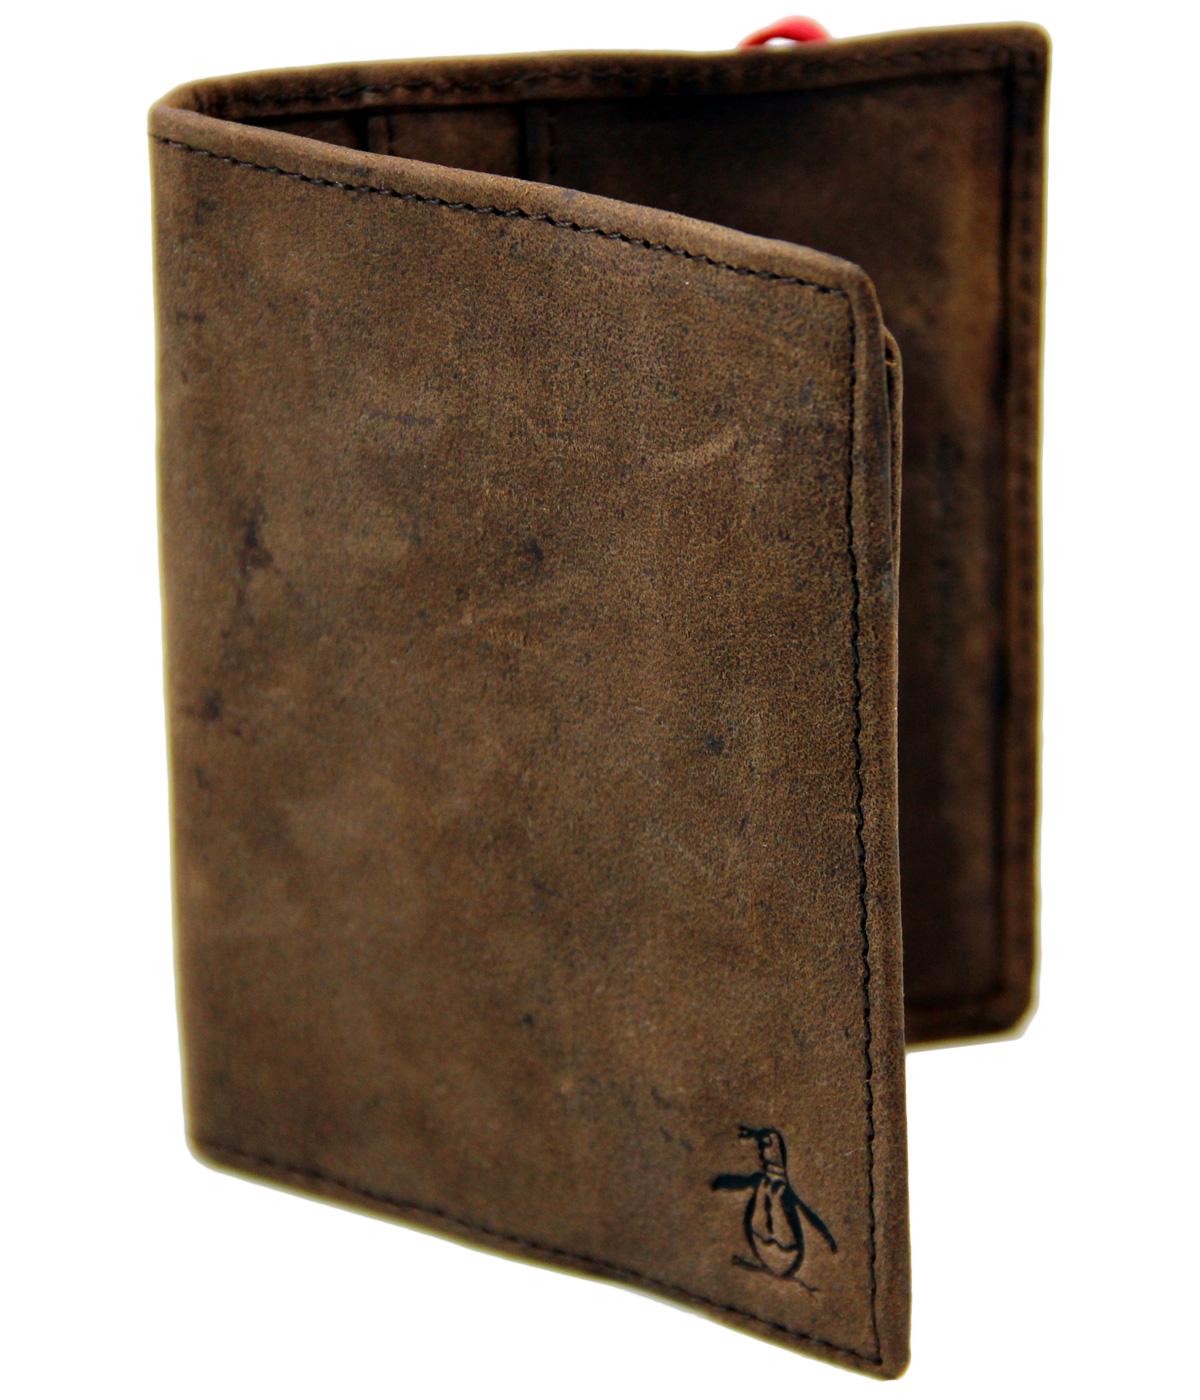 ORIGINAL PENGUIN Retro Leather Bi Fold Wallet in Tan